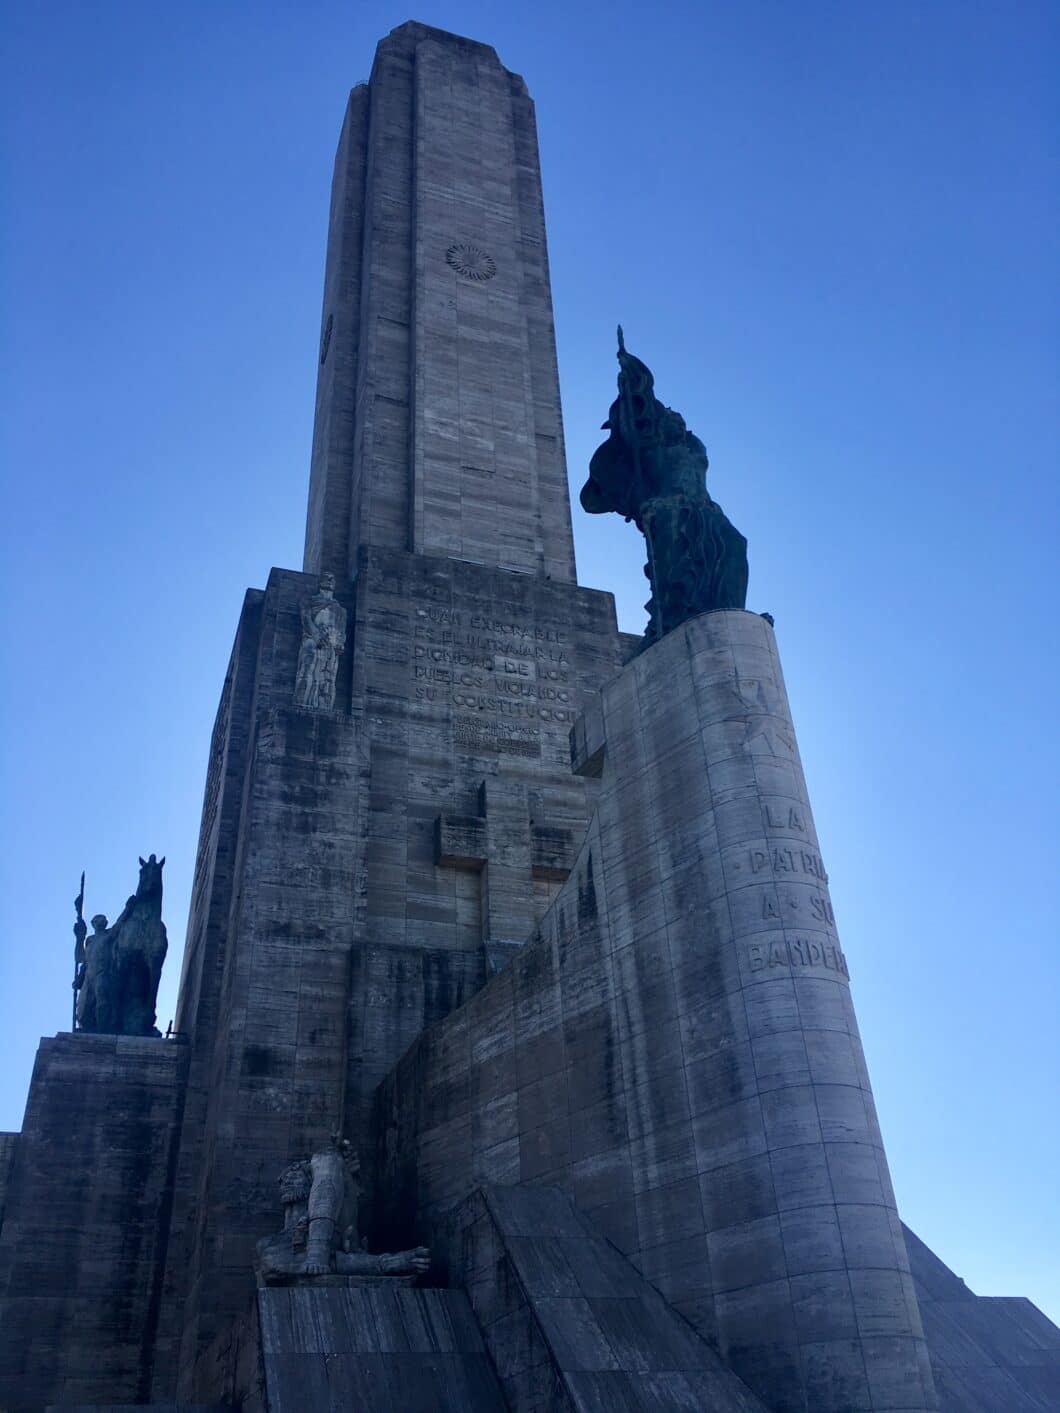 The National Flag Memorial in Rosario